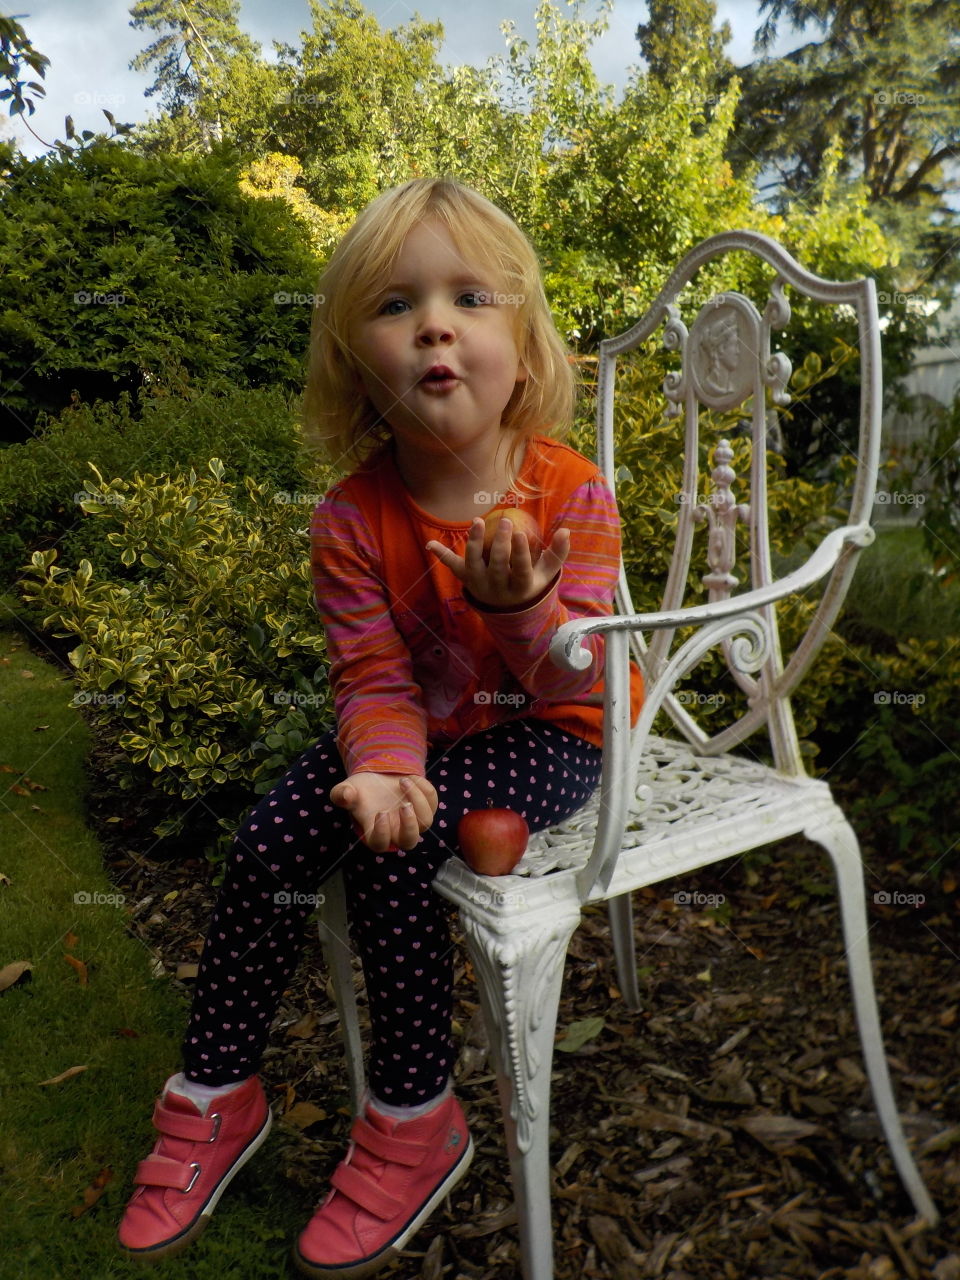 Little girl sitting on chair holding apple